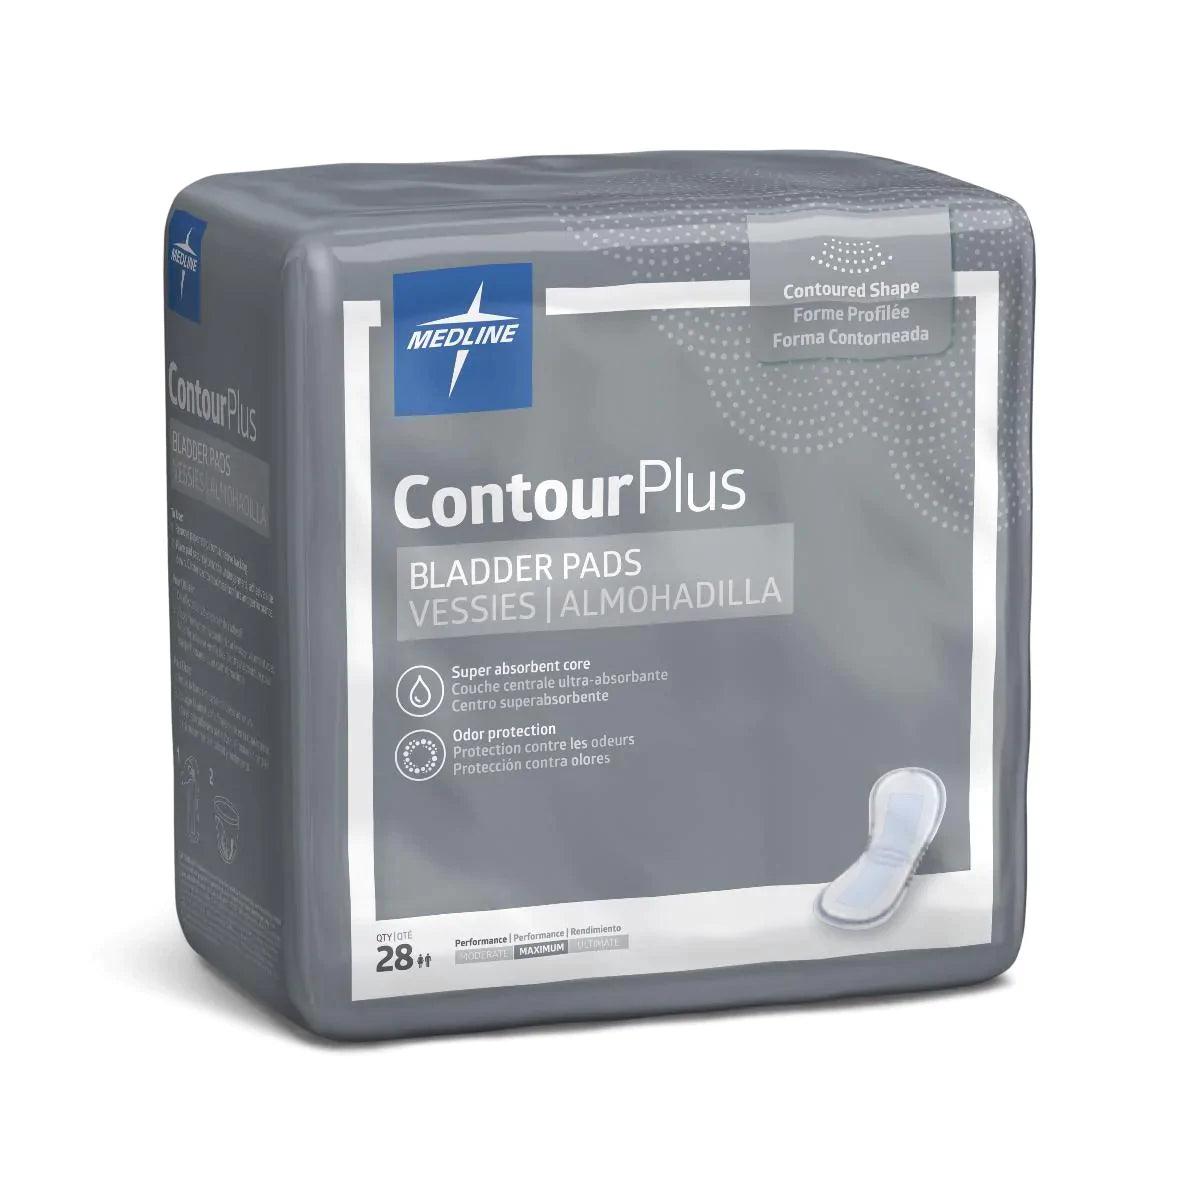 ContourPlus Bladder Control Pads (8"x17") : Ultimate